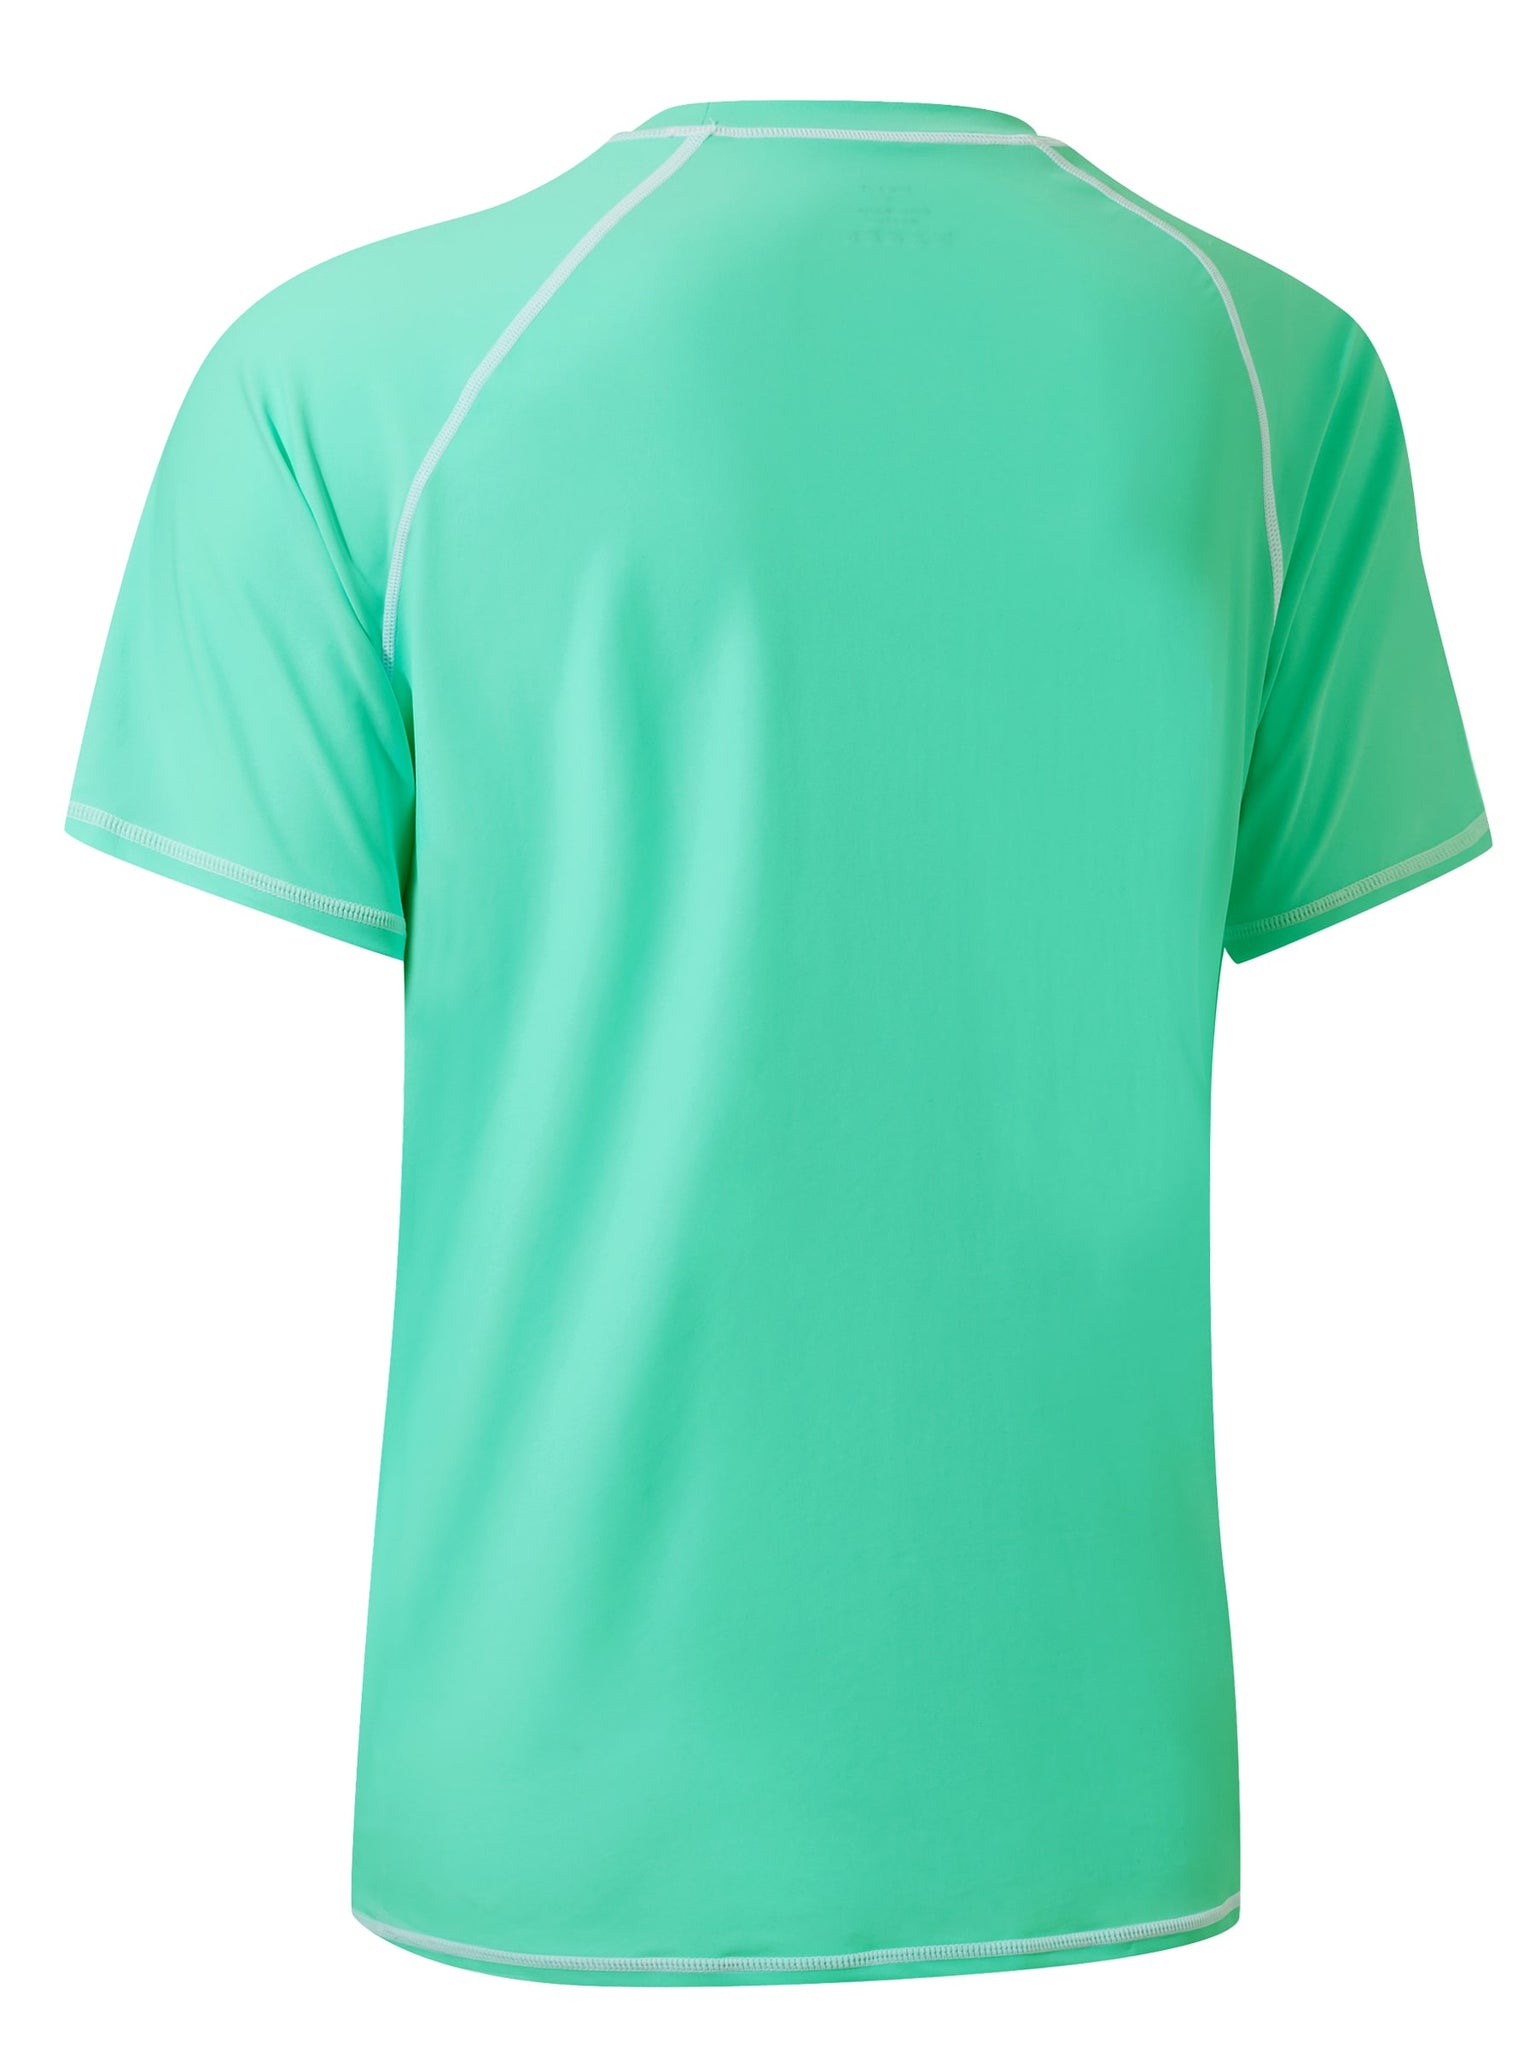 Men's Sun Protection Short Sleeve Shirt_LightGreen3